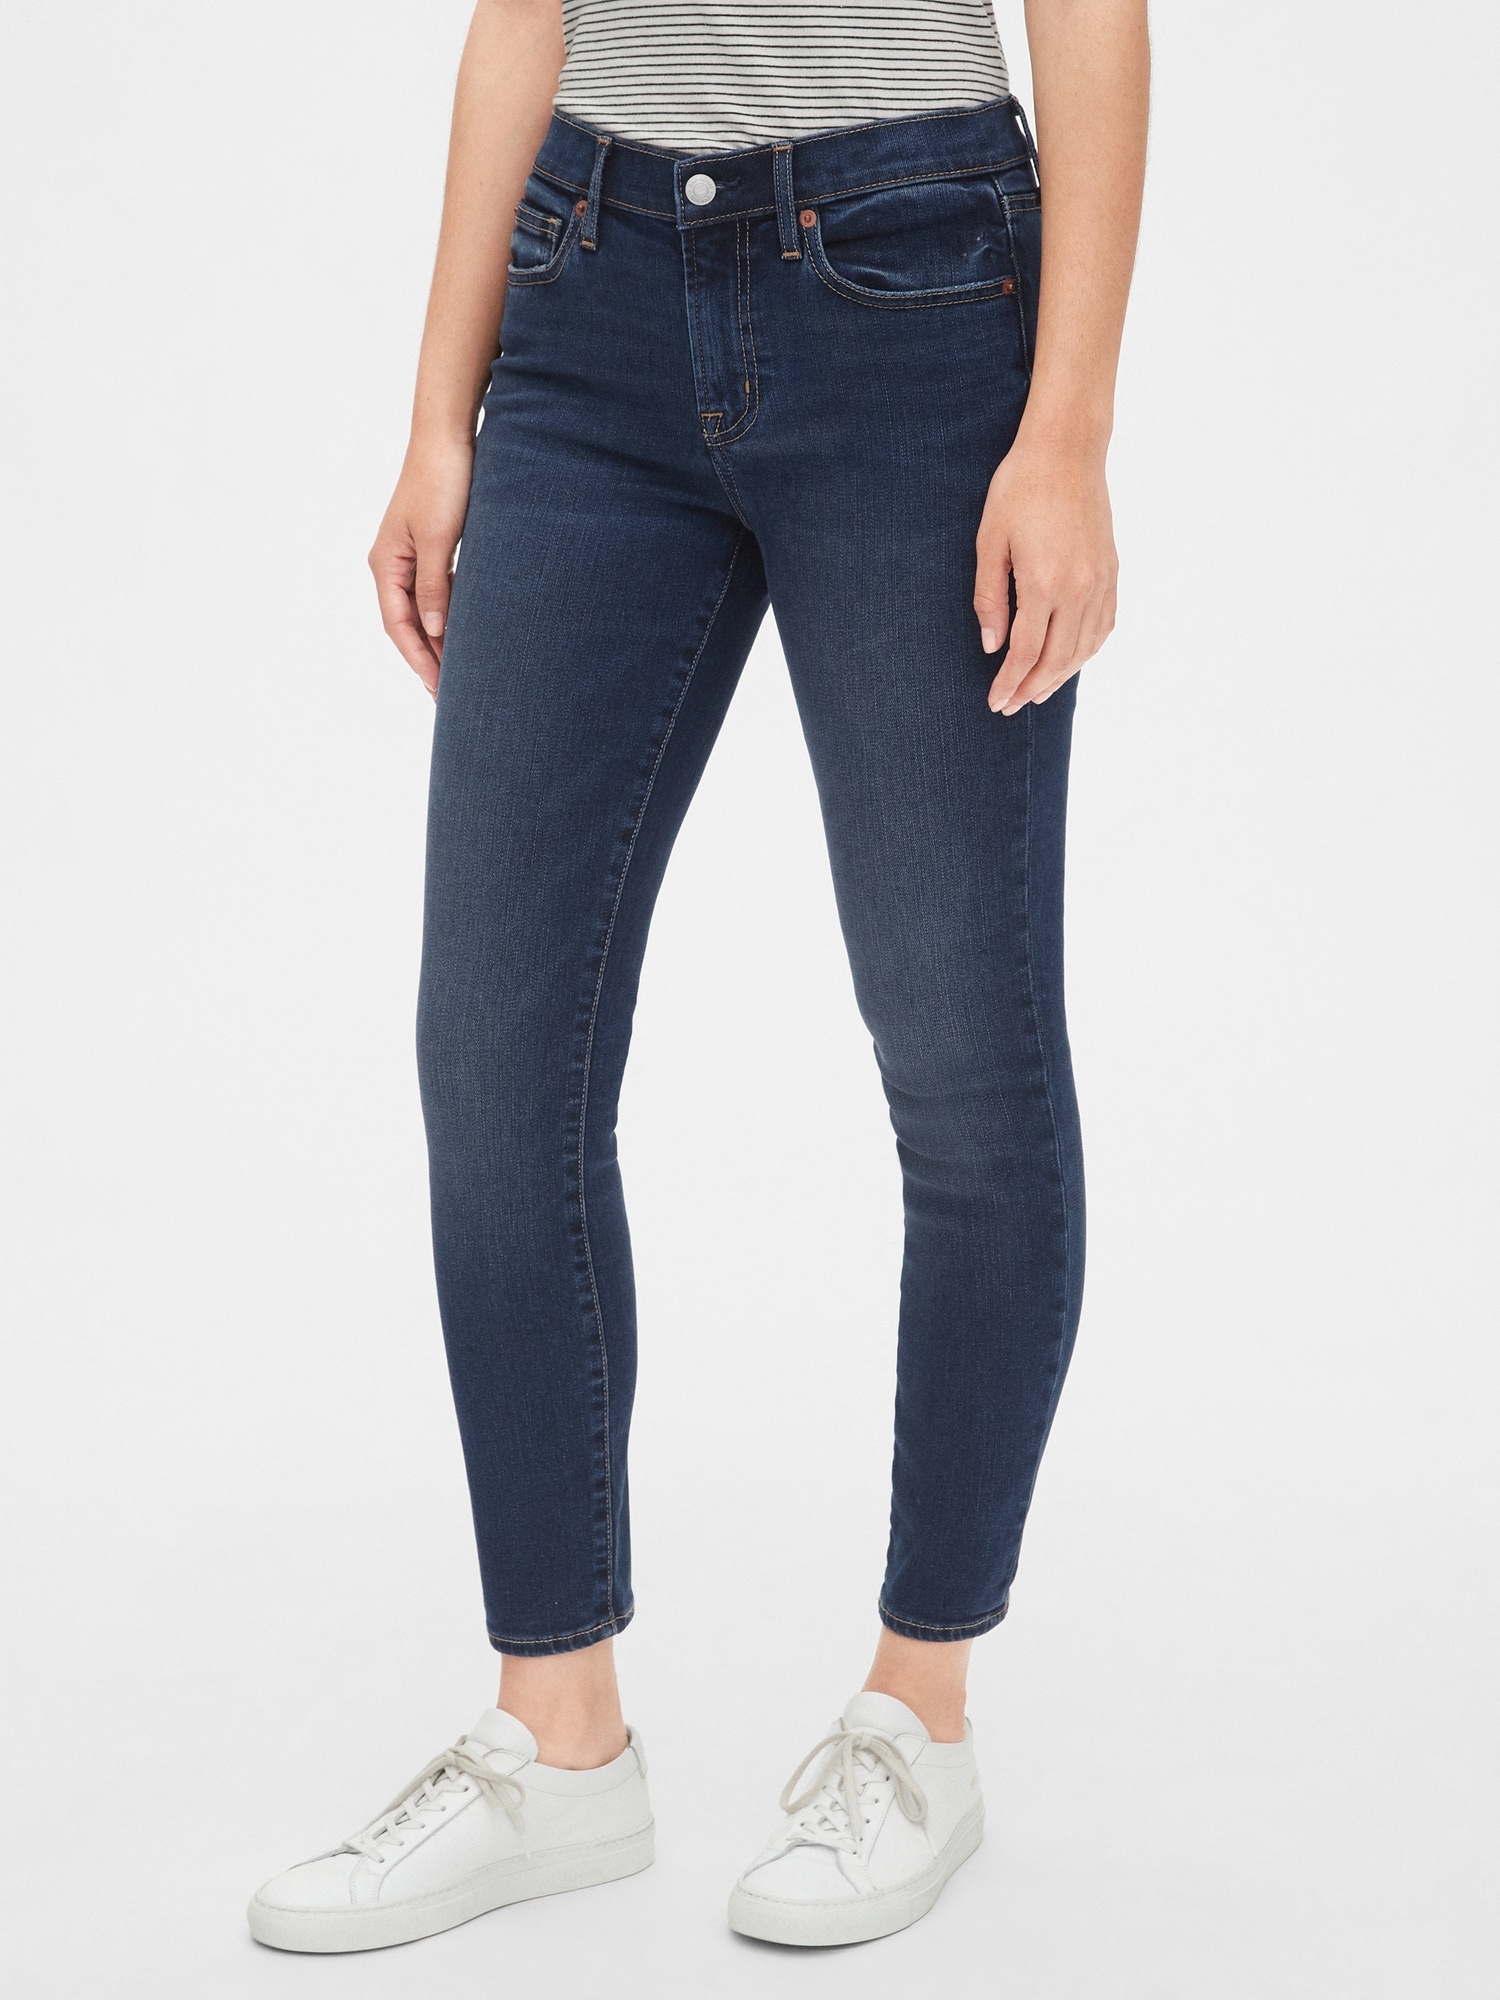 gap software jeans